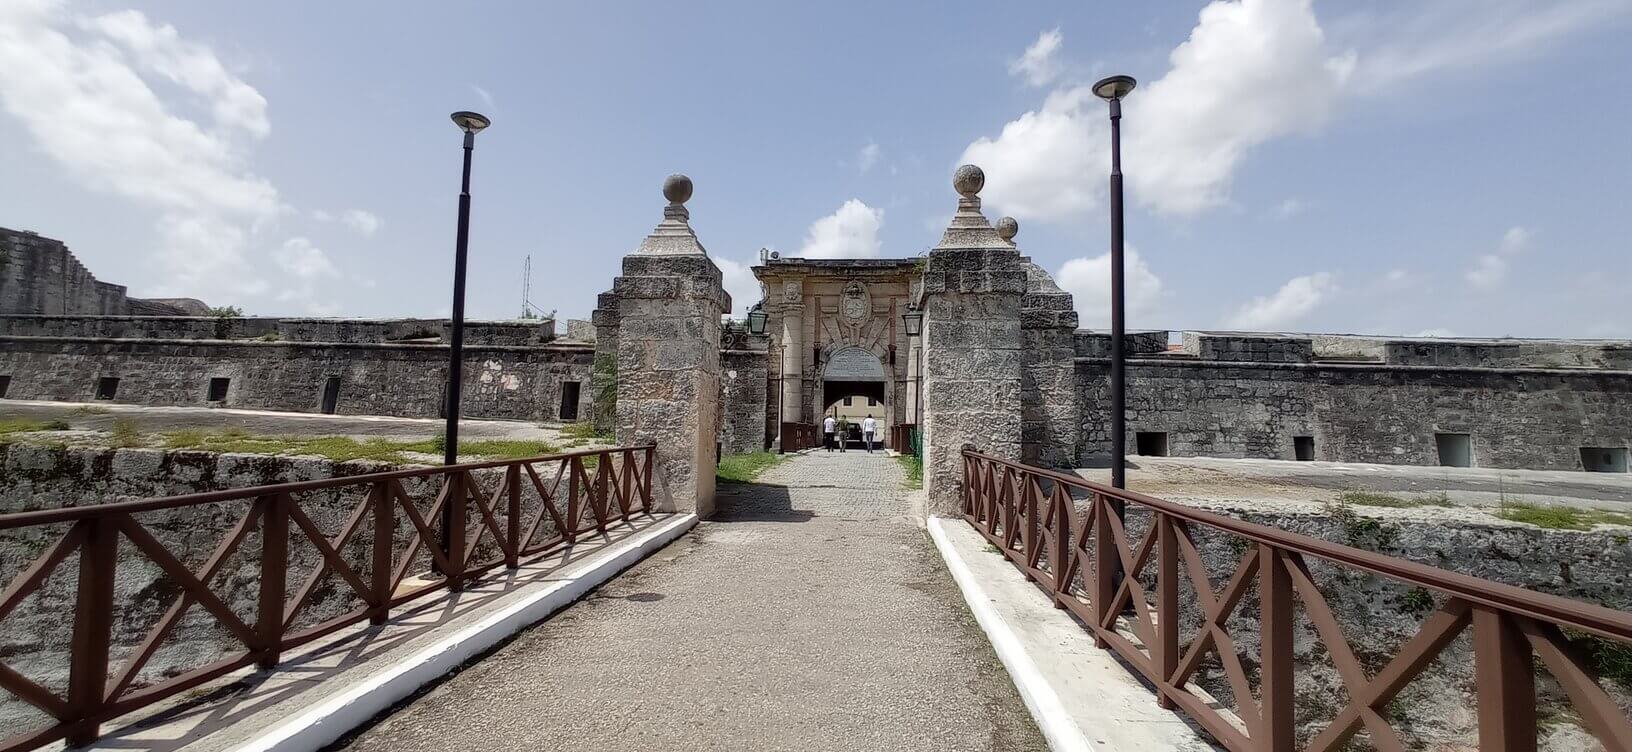 Fortaleza de San Carlos cuba